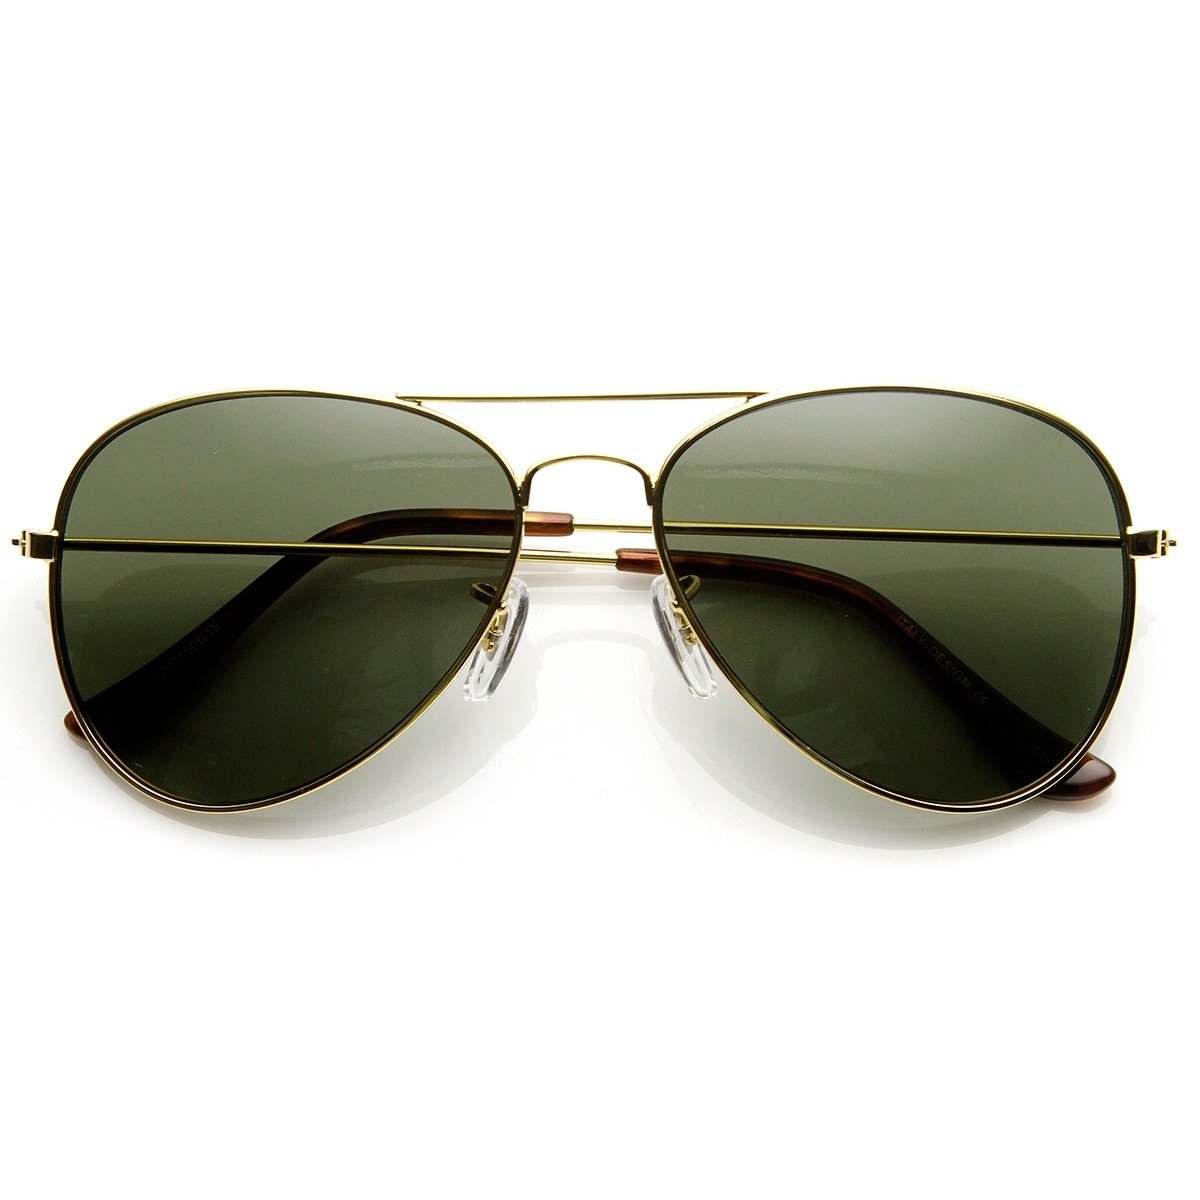 Original Classic Metal Standard Aviator Sunglasses - Nickel Plated Frame - Gold